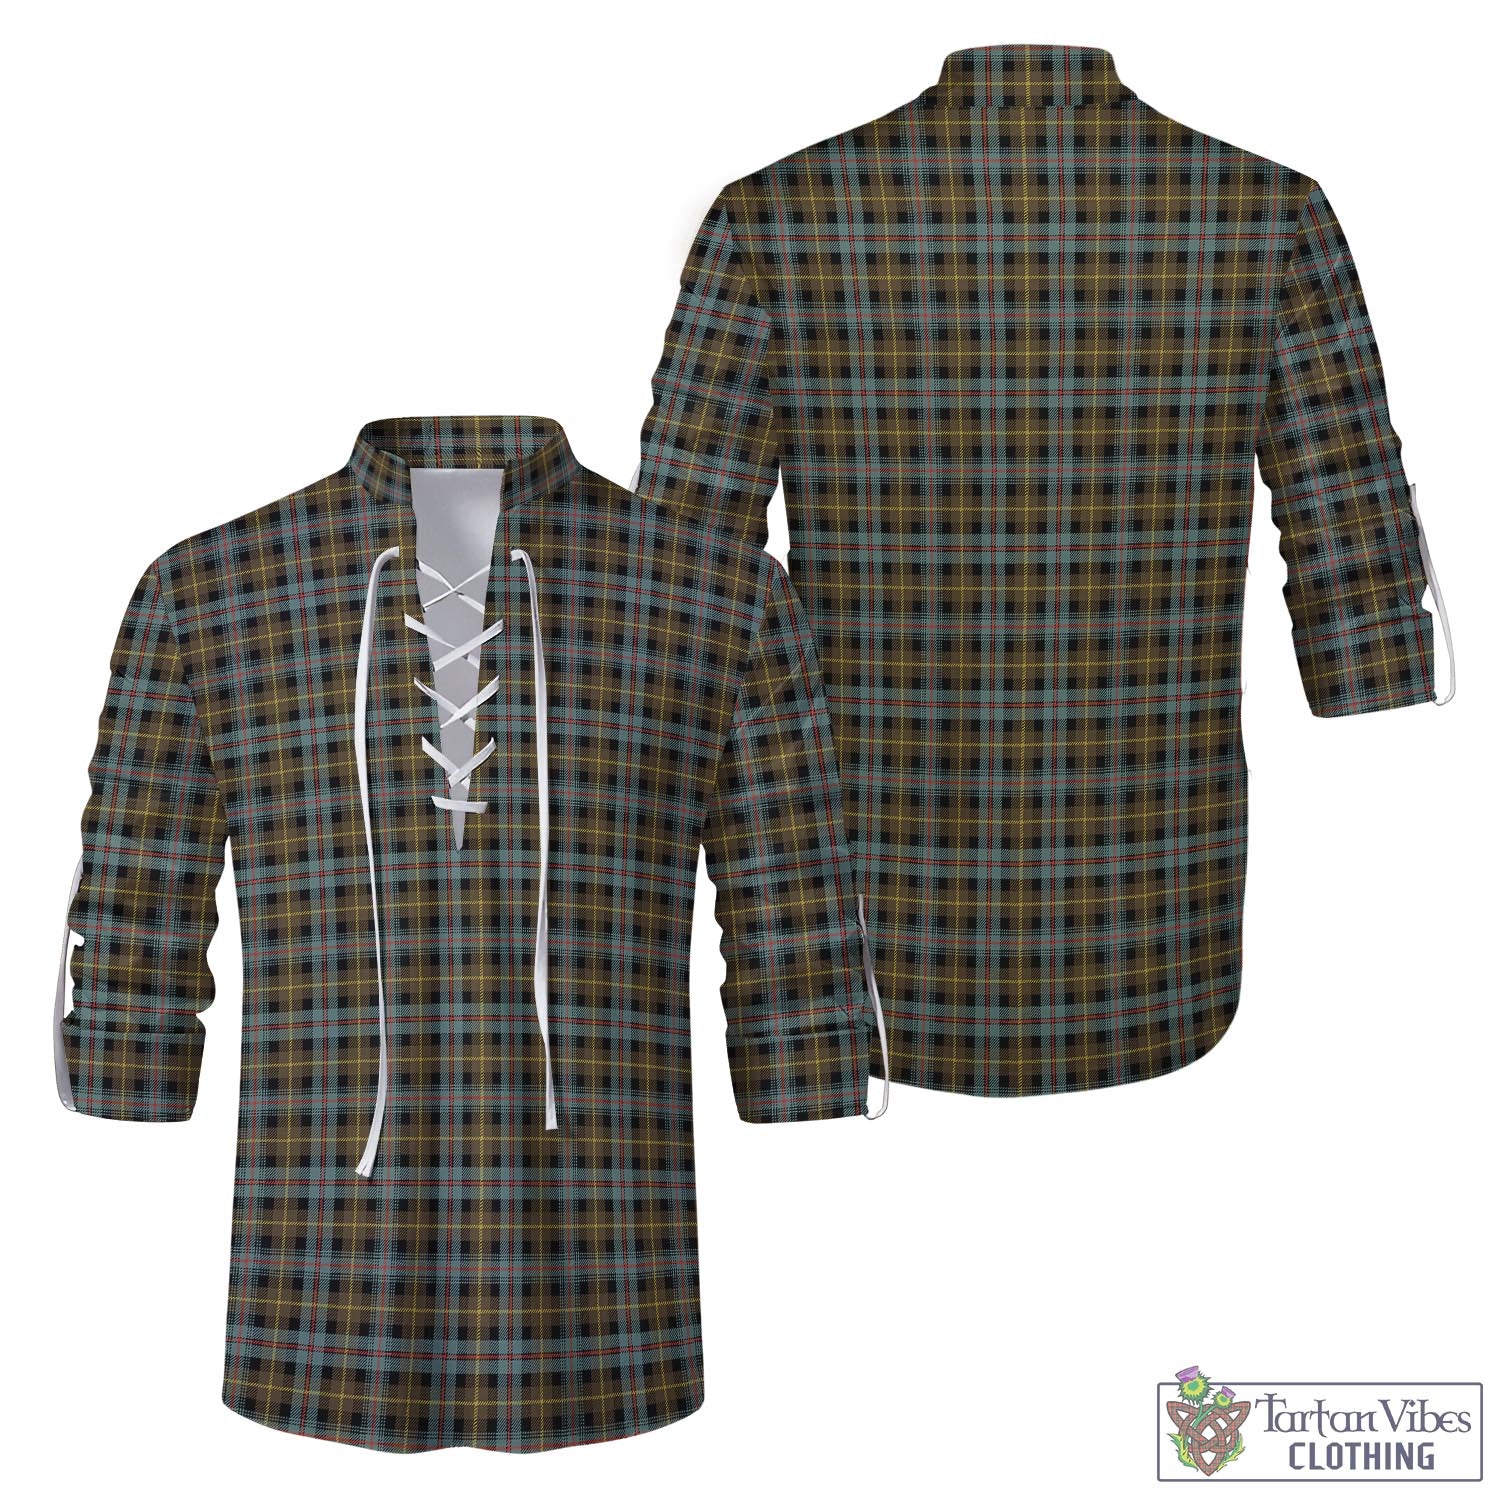 Tartan Vibes Clothing Farquharson Weathered Tartan Men's Scottish Traditional Jacobite Ghillie Kilt Shirt